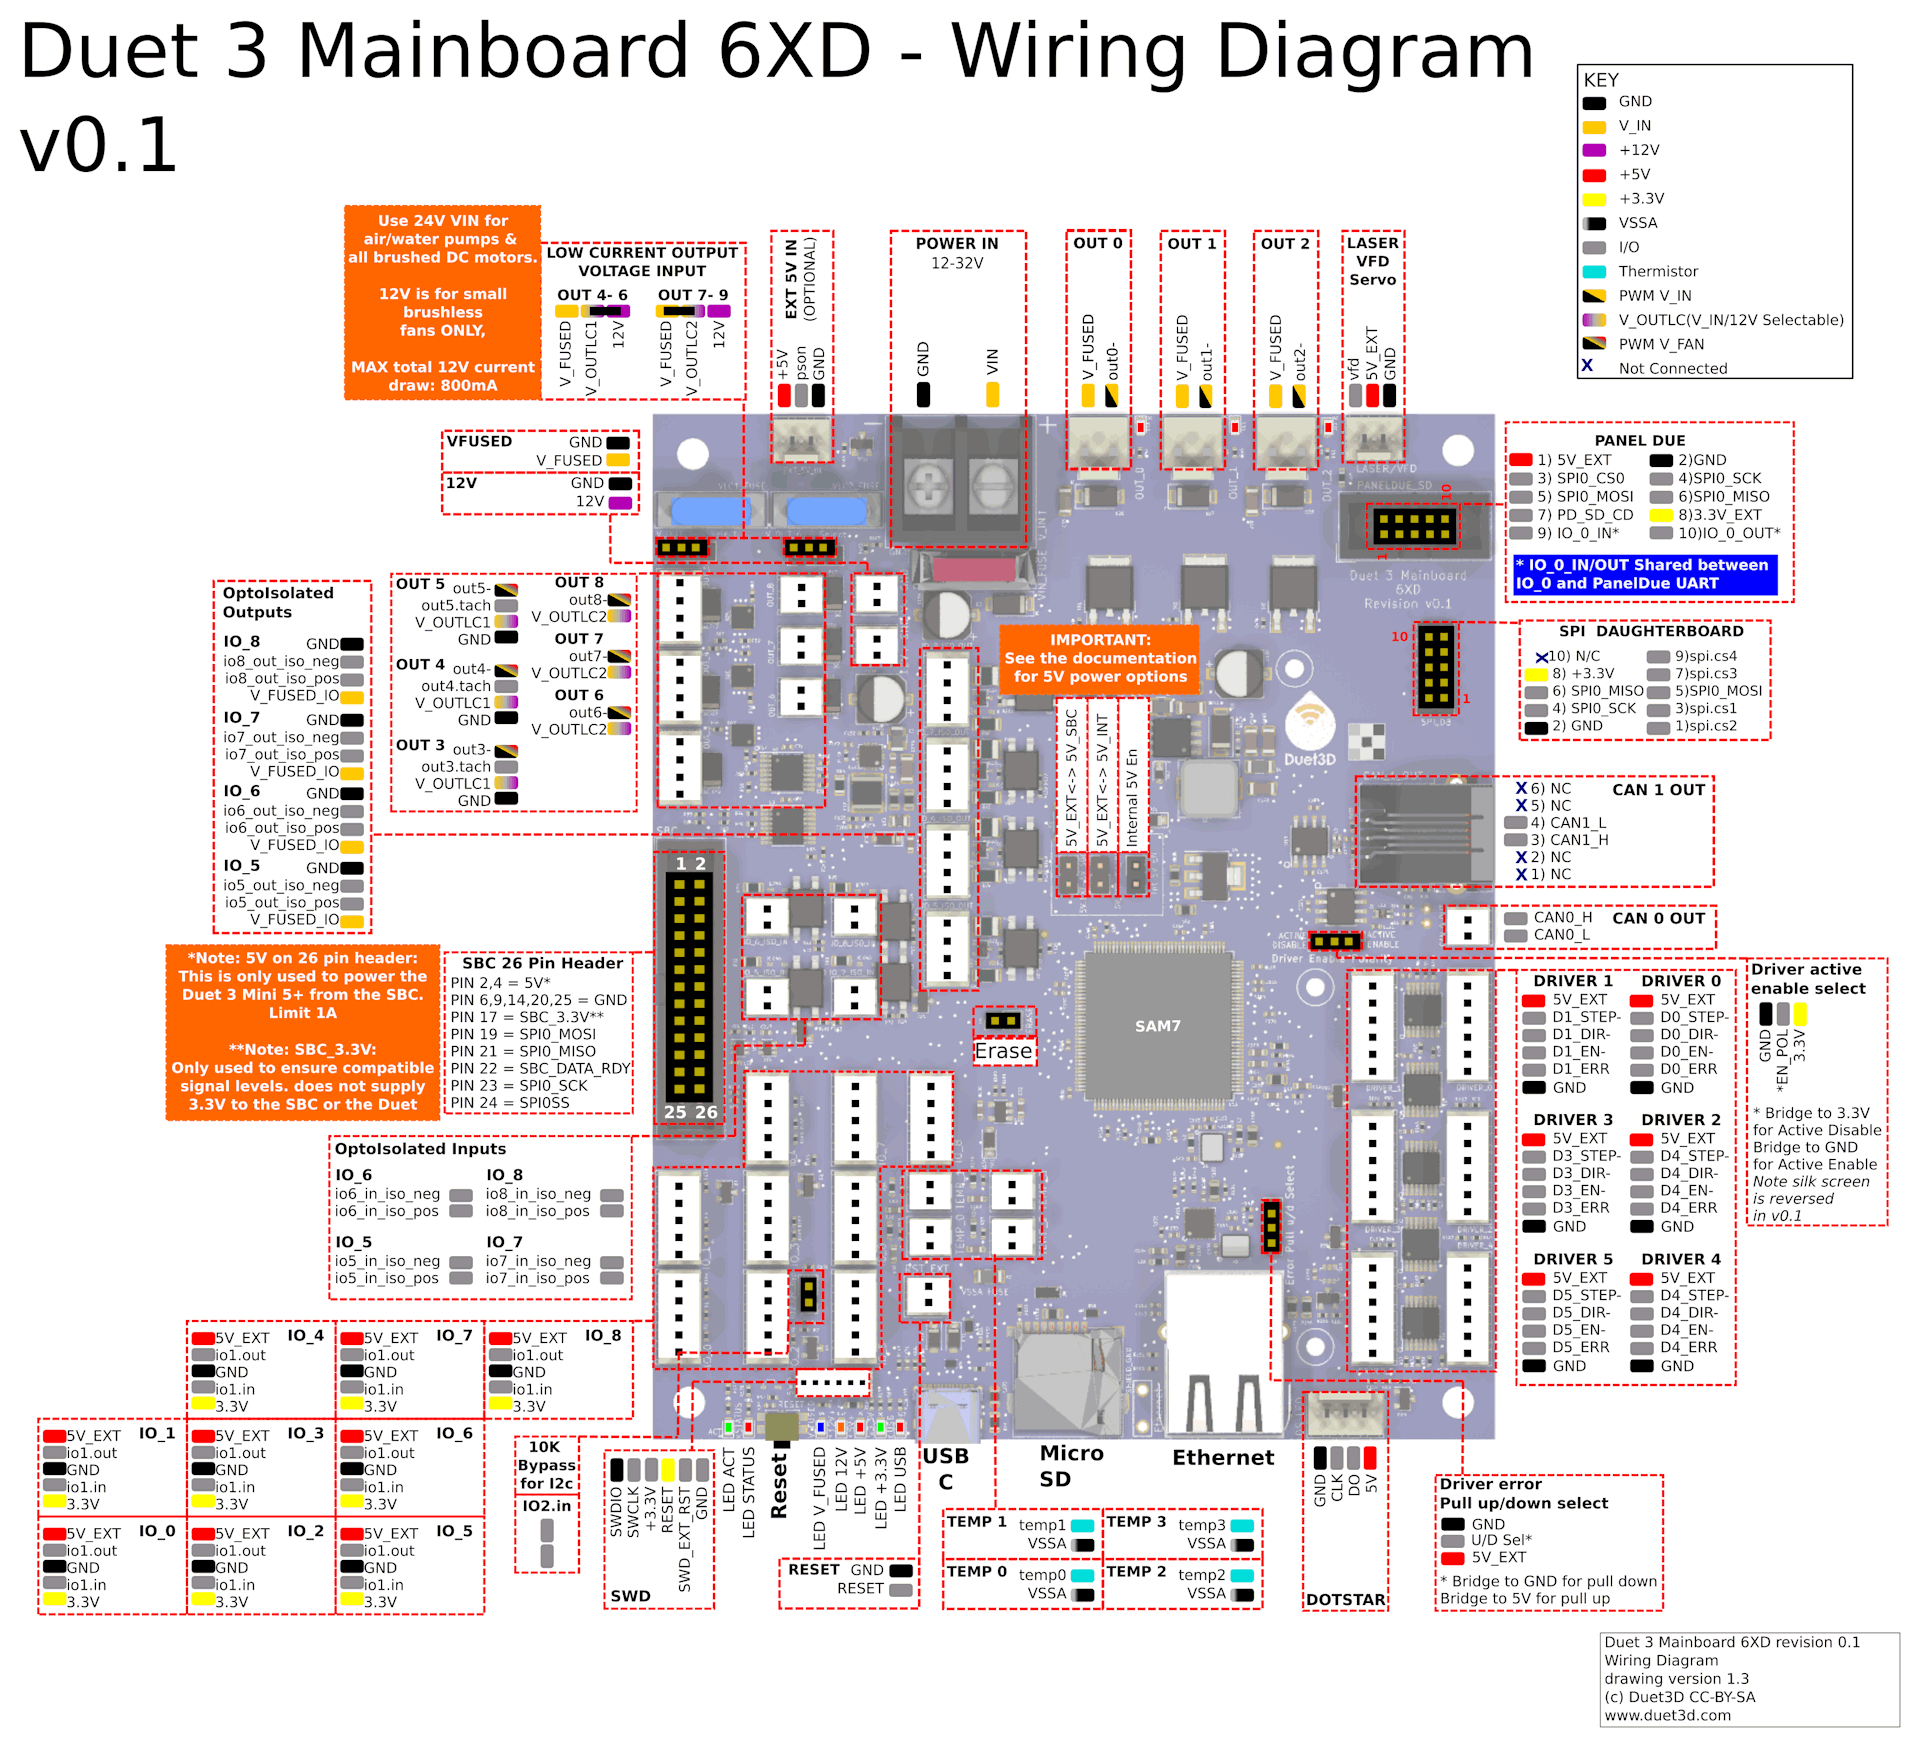 Duet3 Mainboard 6XD prototype v0.1 Wiring Diagram